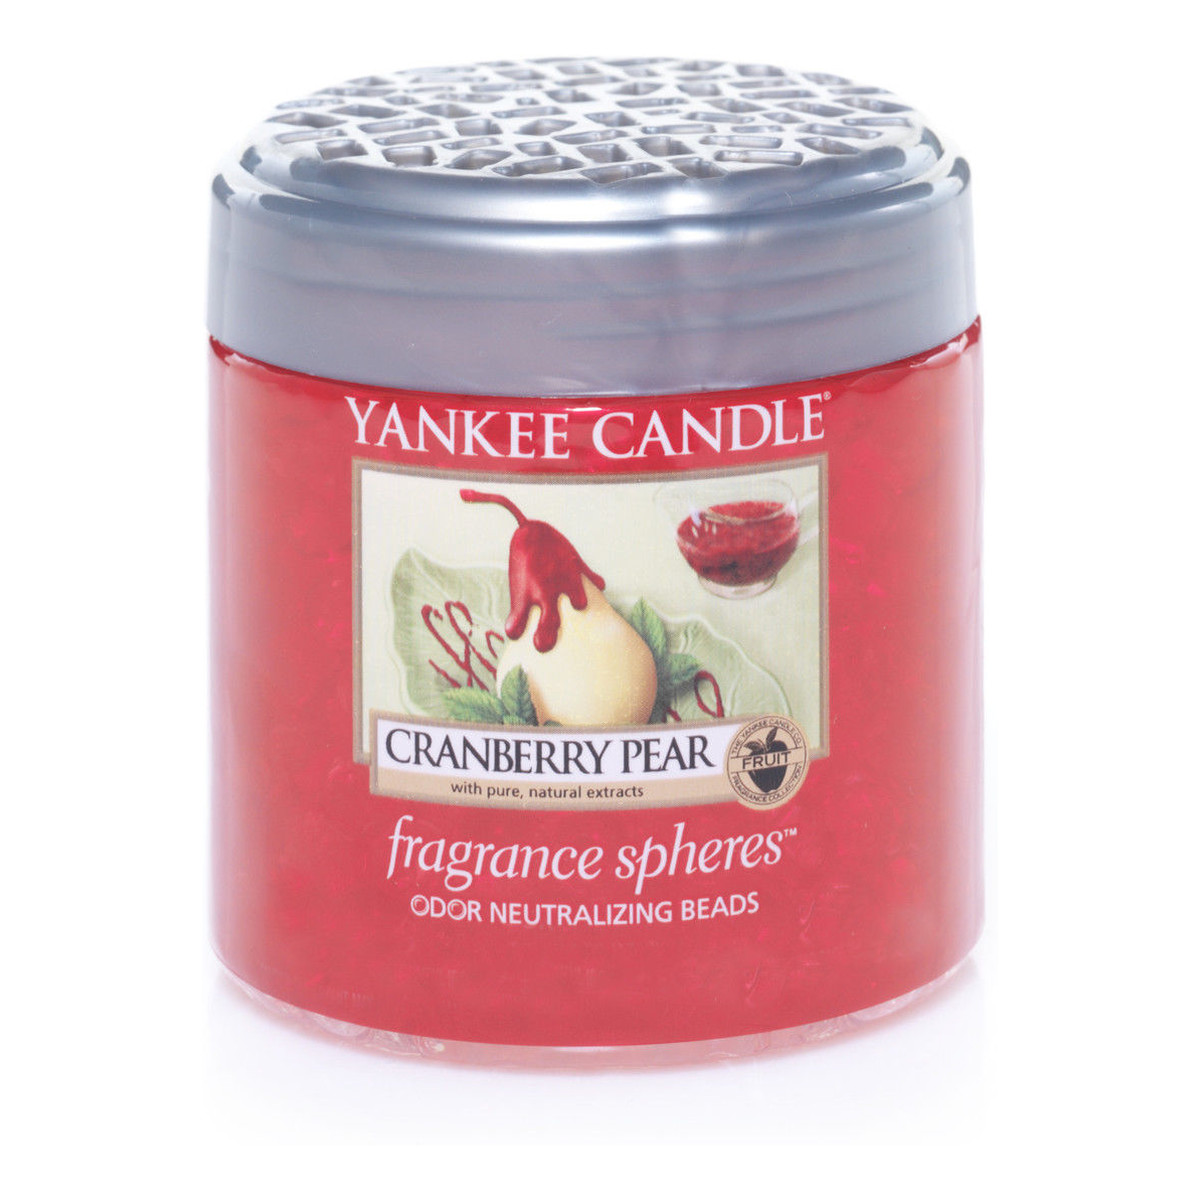 Yankee Candle Fragrance Spheres kulki zapachowe Cranberry Pear 170g